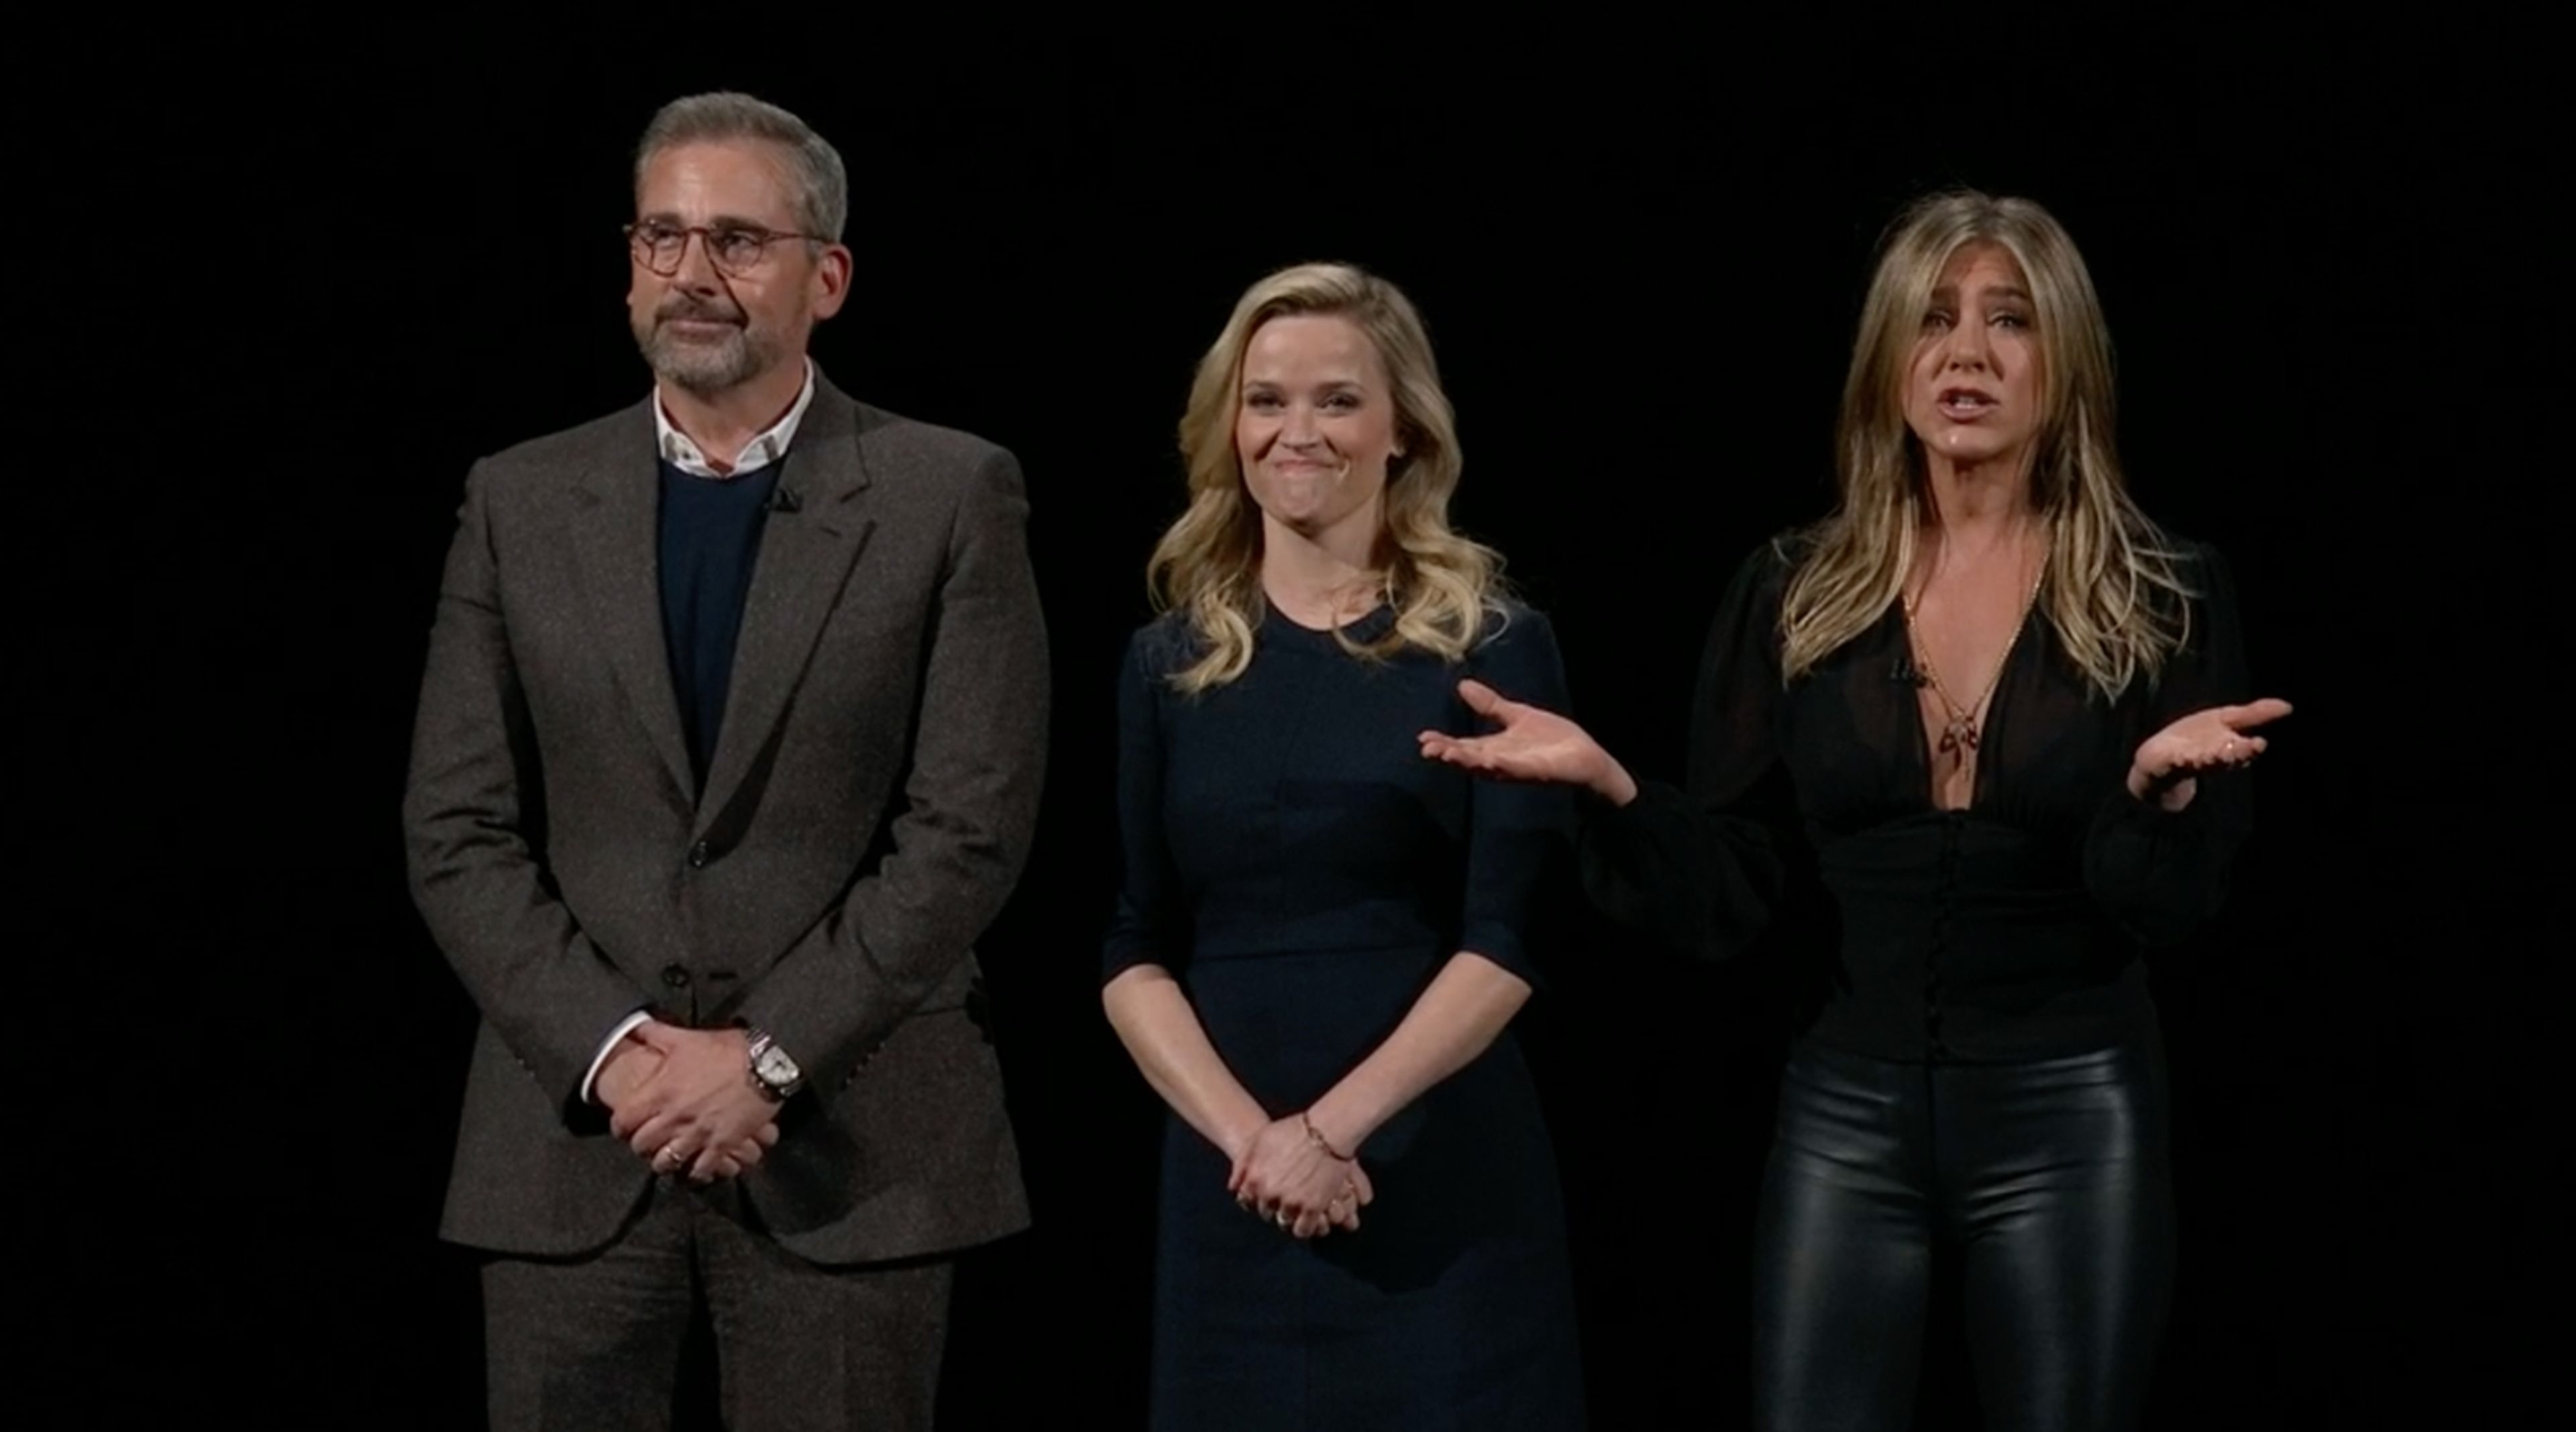 Presentación Apple TV+ - Steve Carell, Reese Witherspoon y Jennifer Aniston